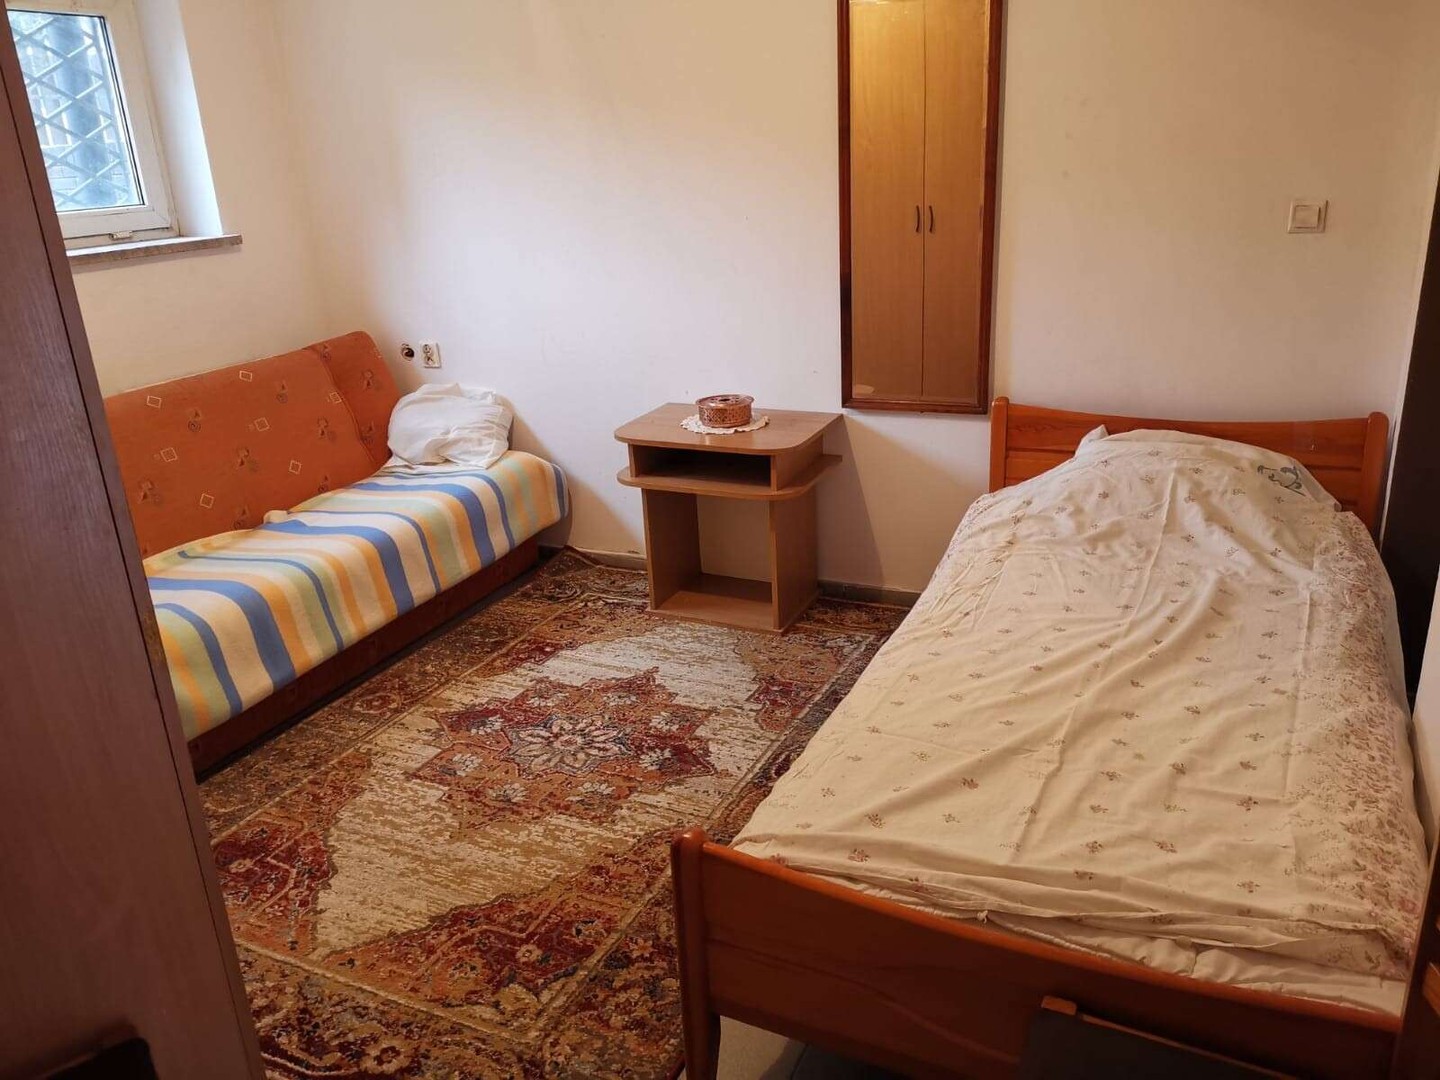 Cheap private room in poznan